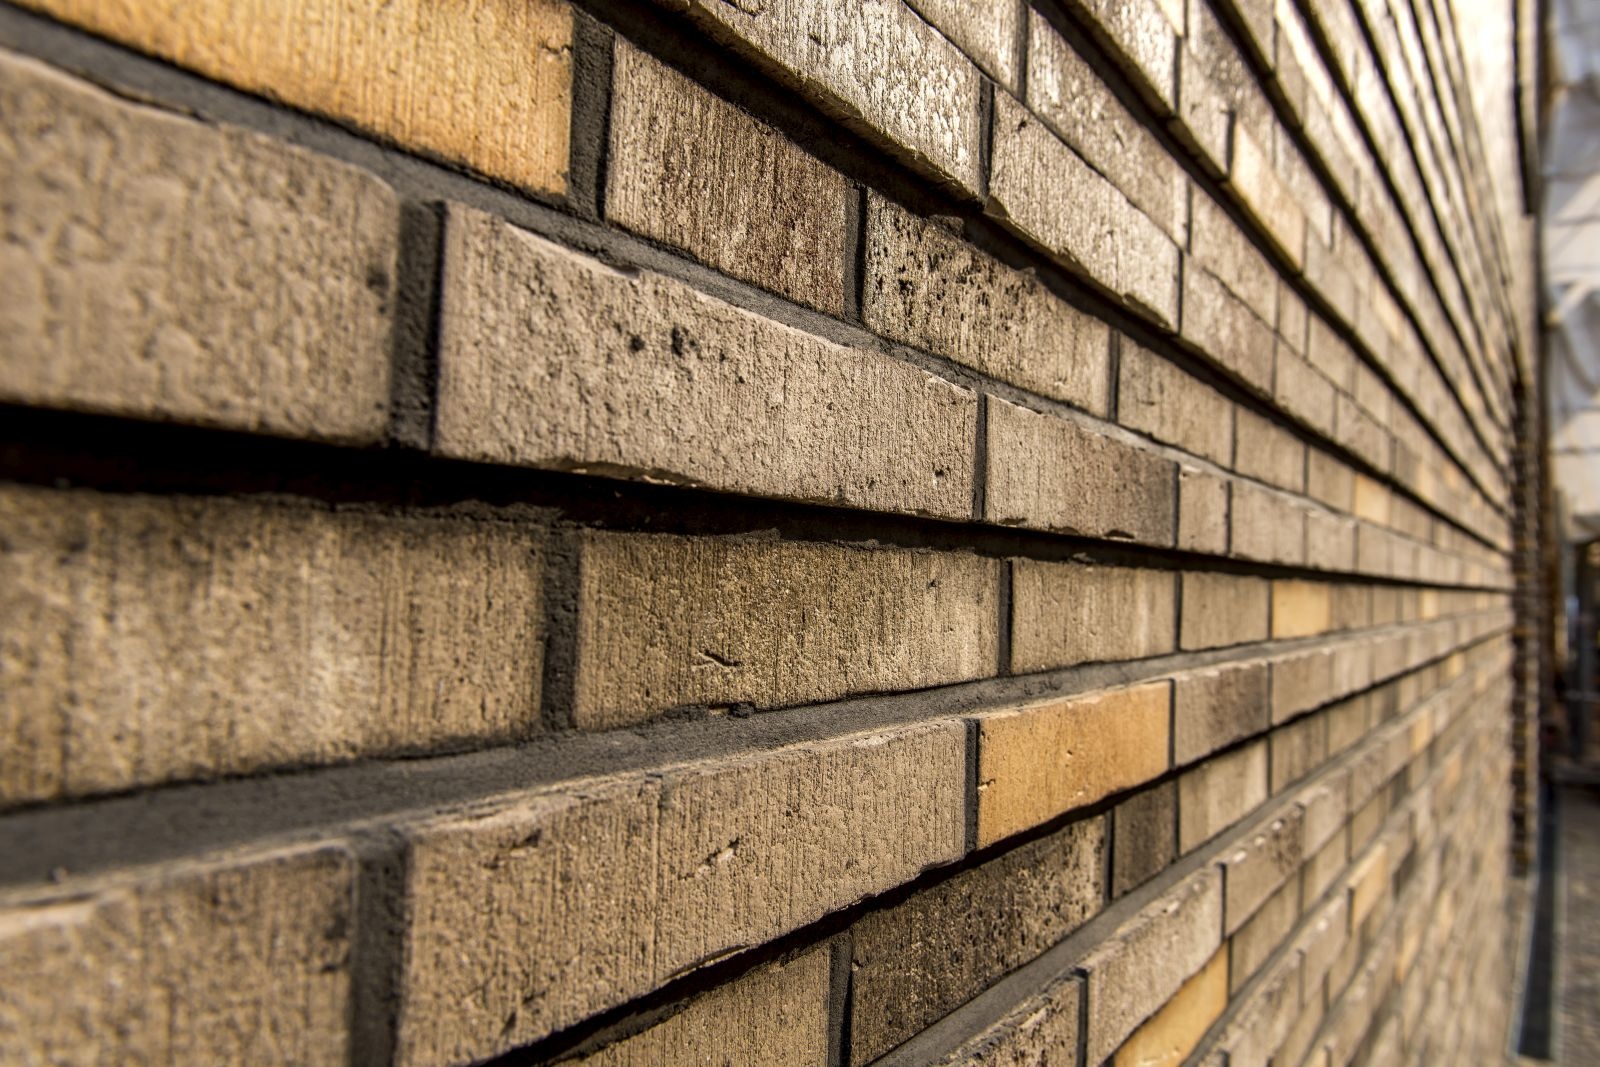 Accentuated brickwork